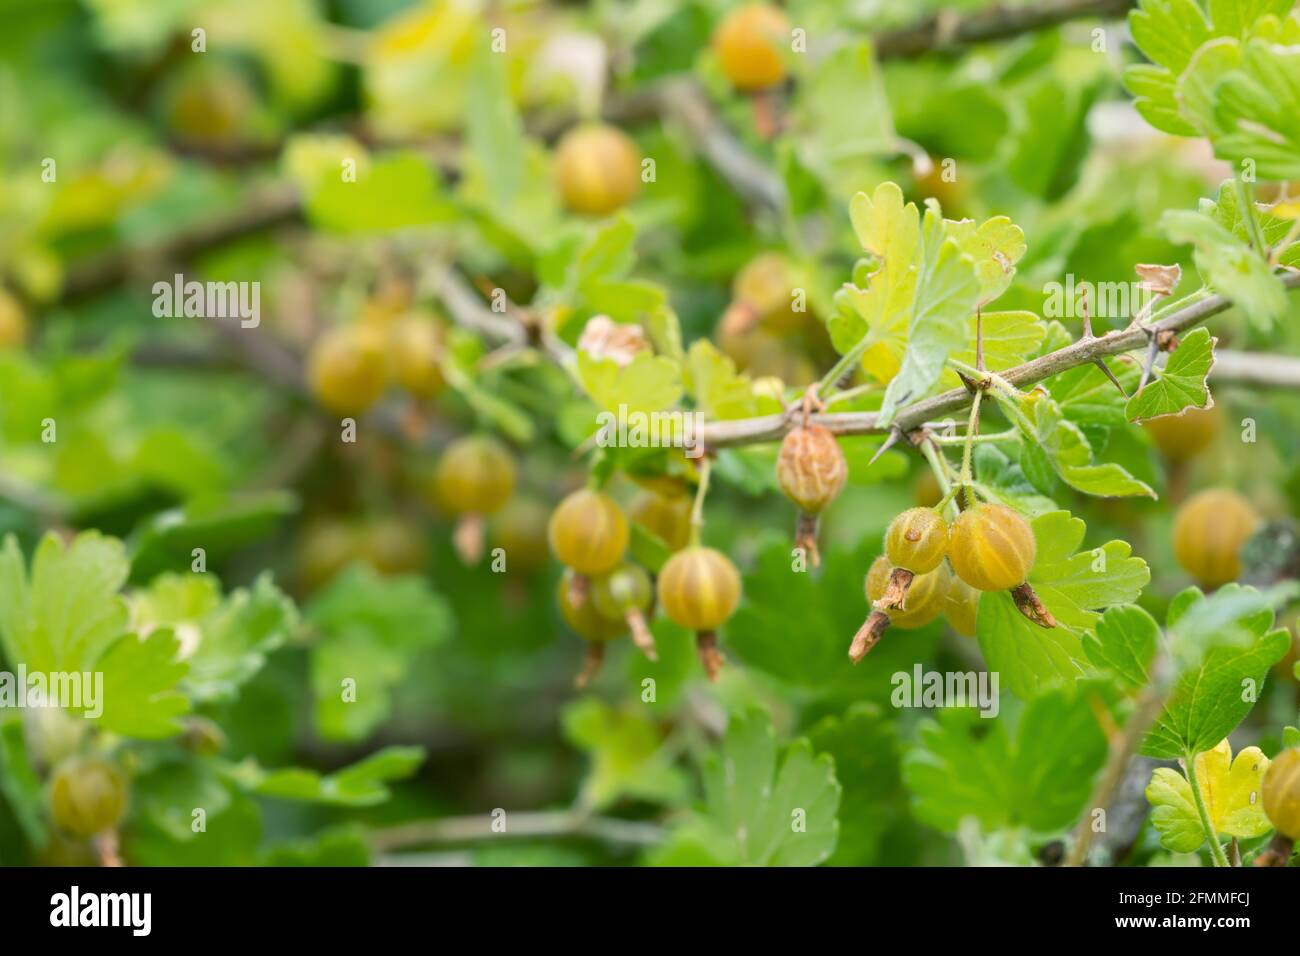 Gooseberry, Ribes uva-crispa bush with berries Stock Photo